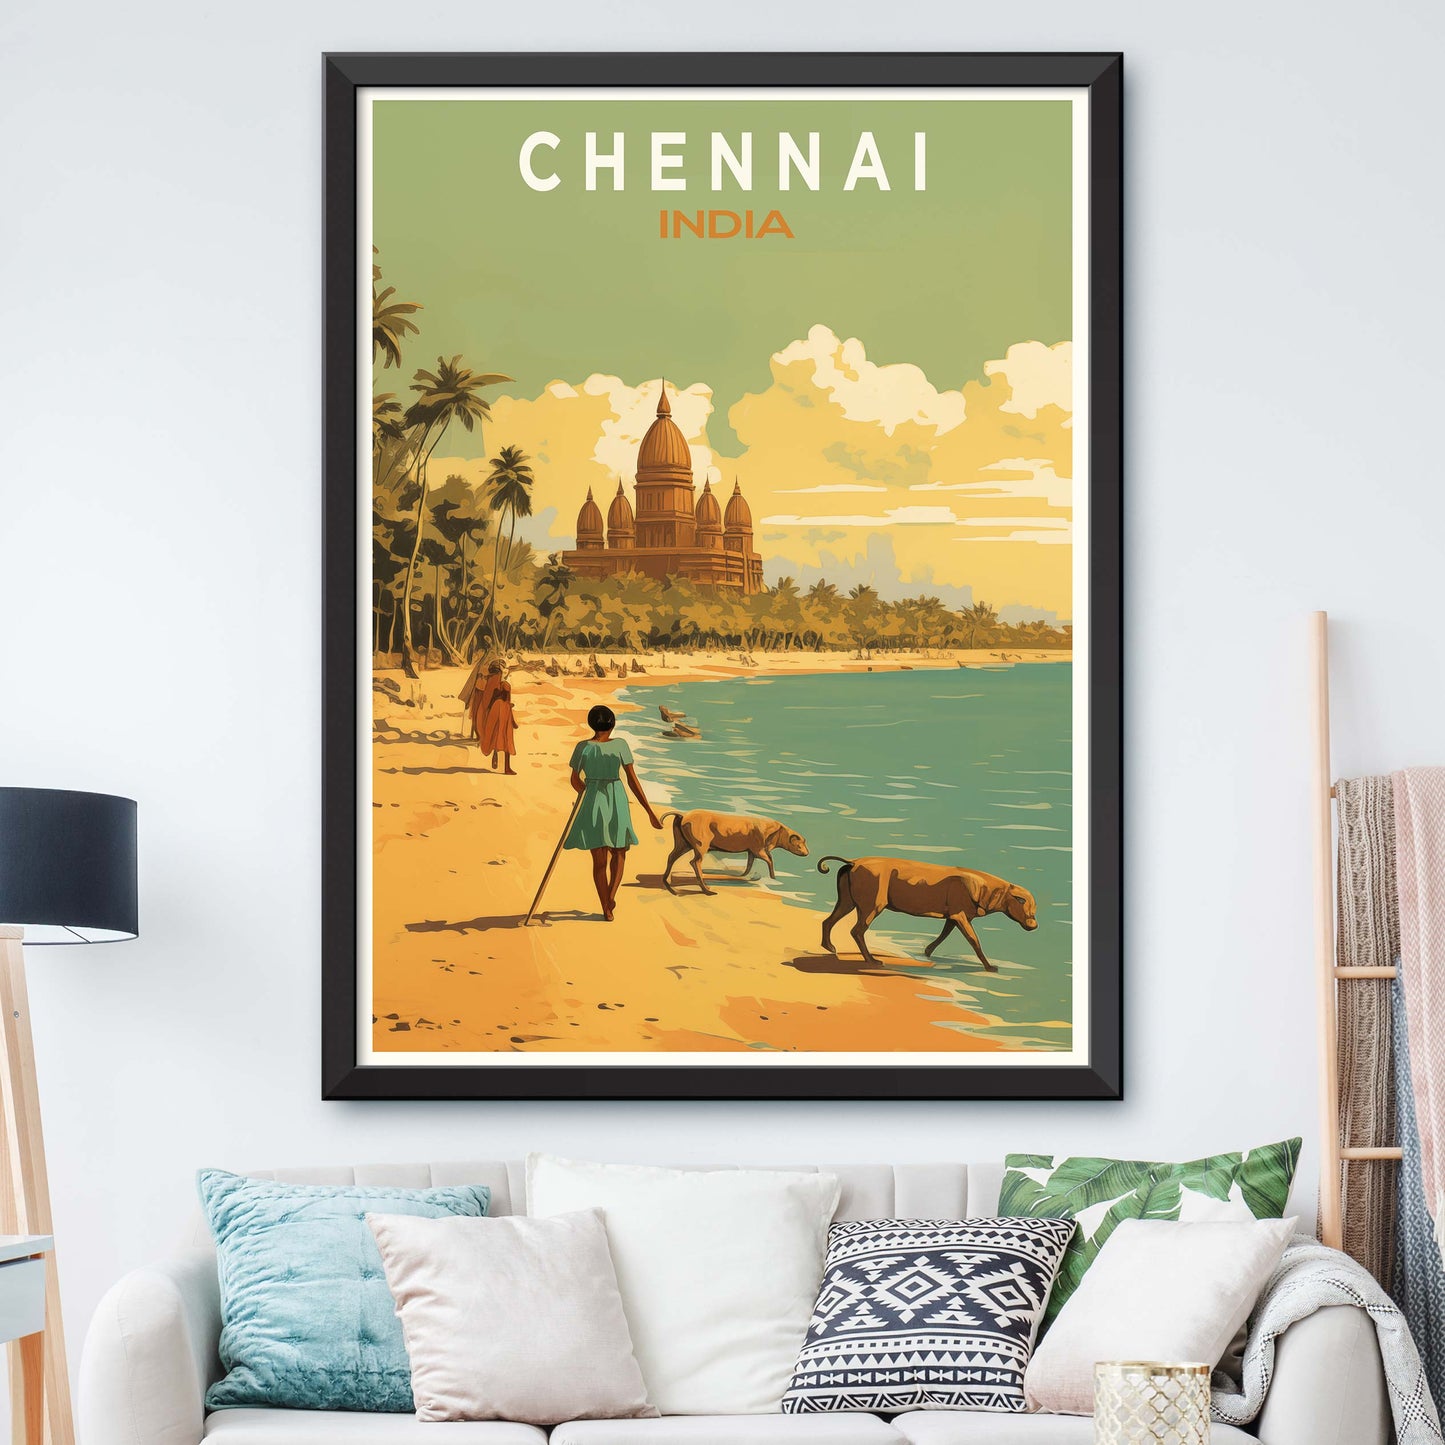 Chennai Chronicles: A Kaleidoscope of South Indian Splendor